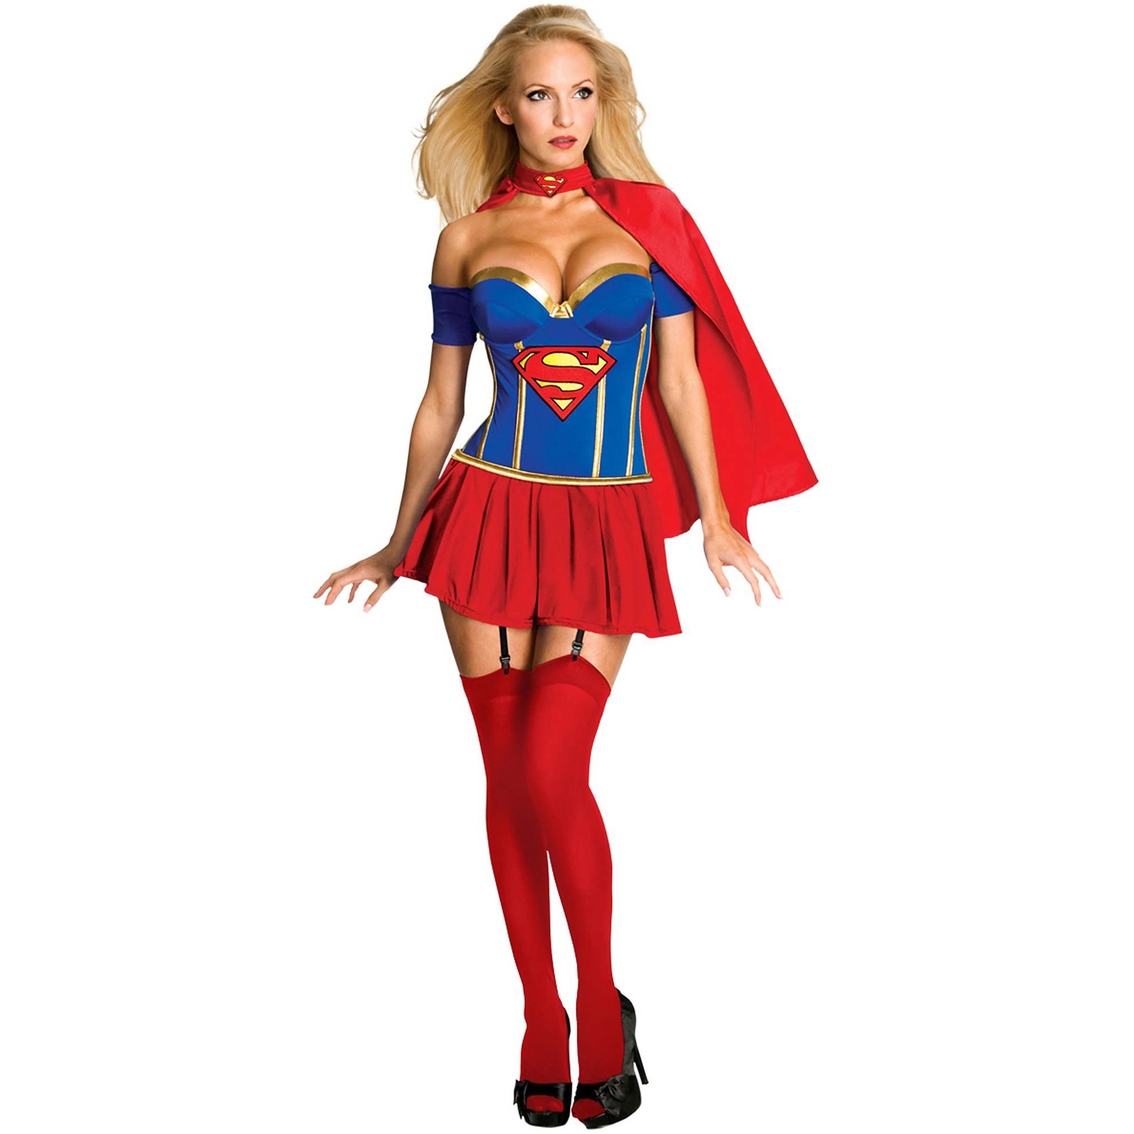 Rubies Costume Women's Supergirl Deluxe Costume, Medium.